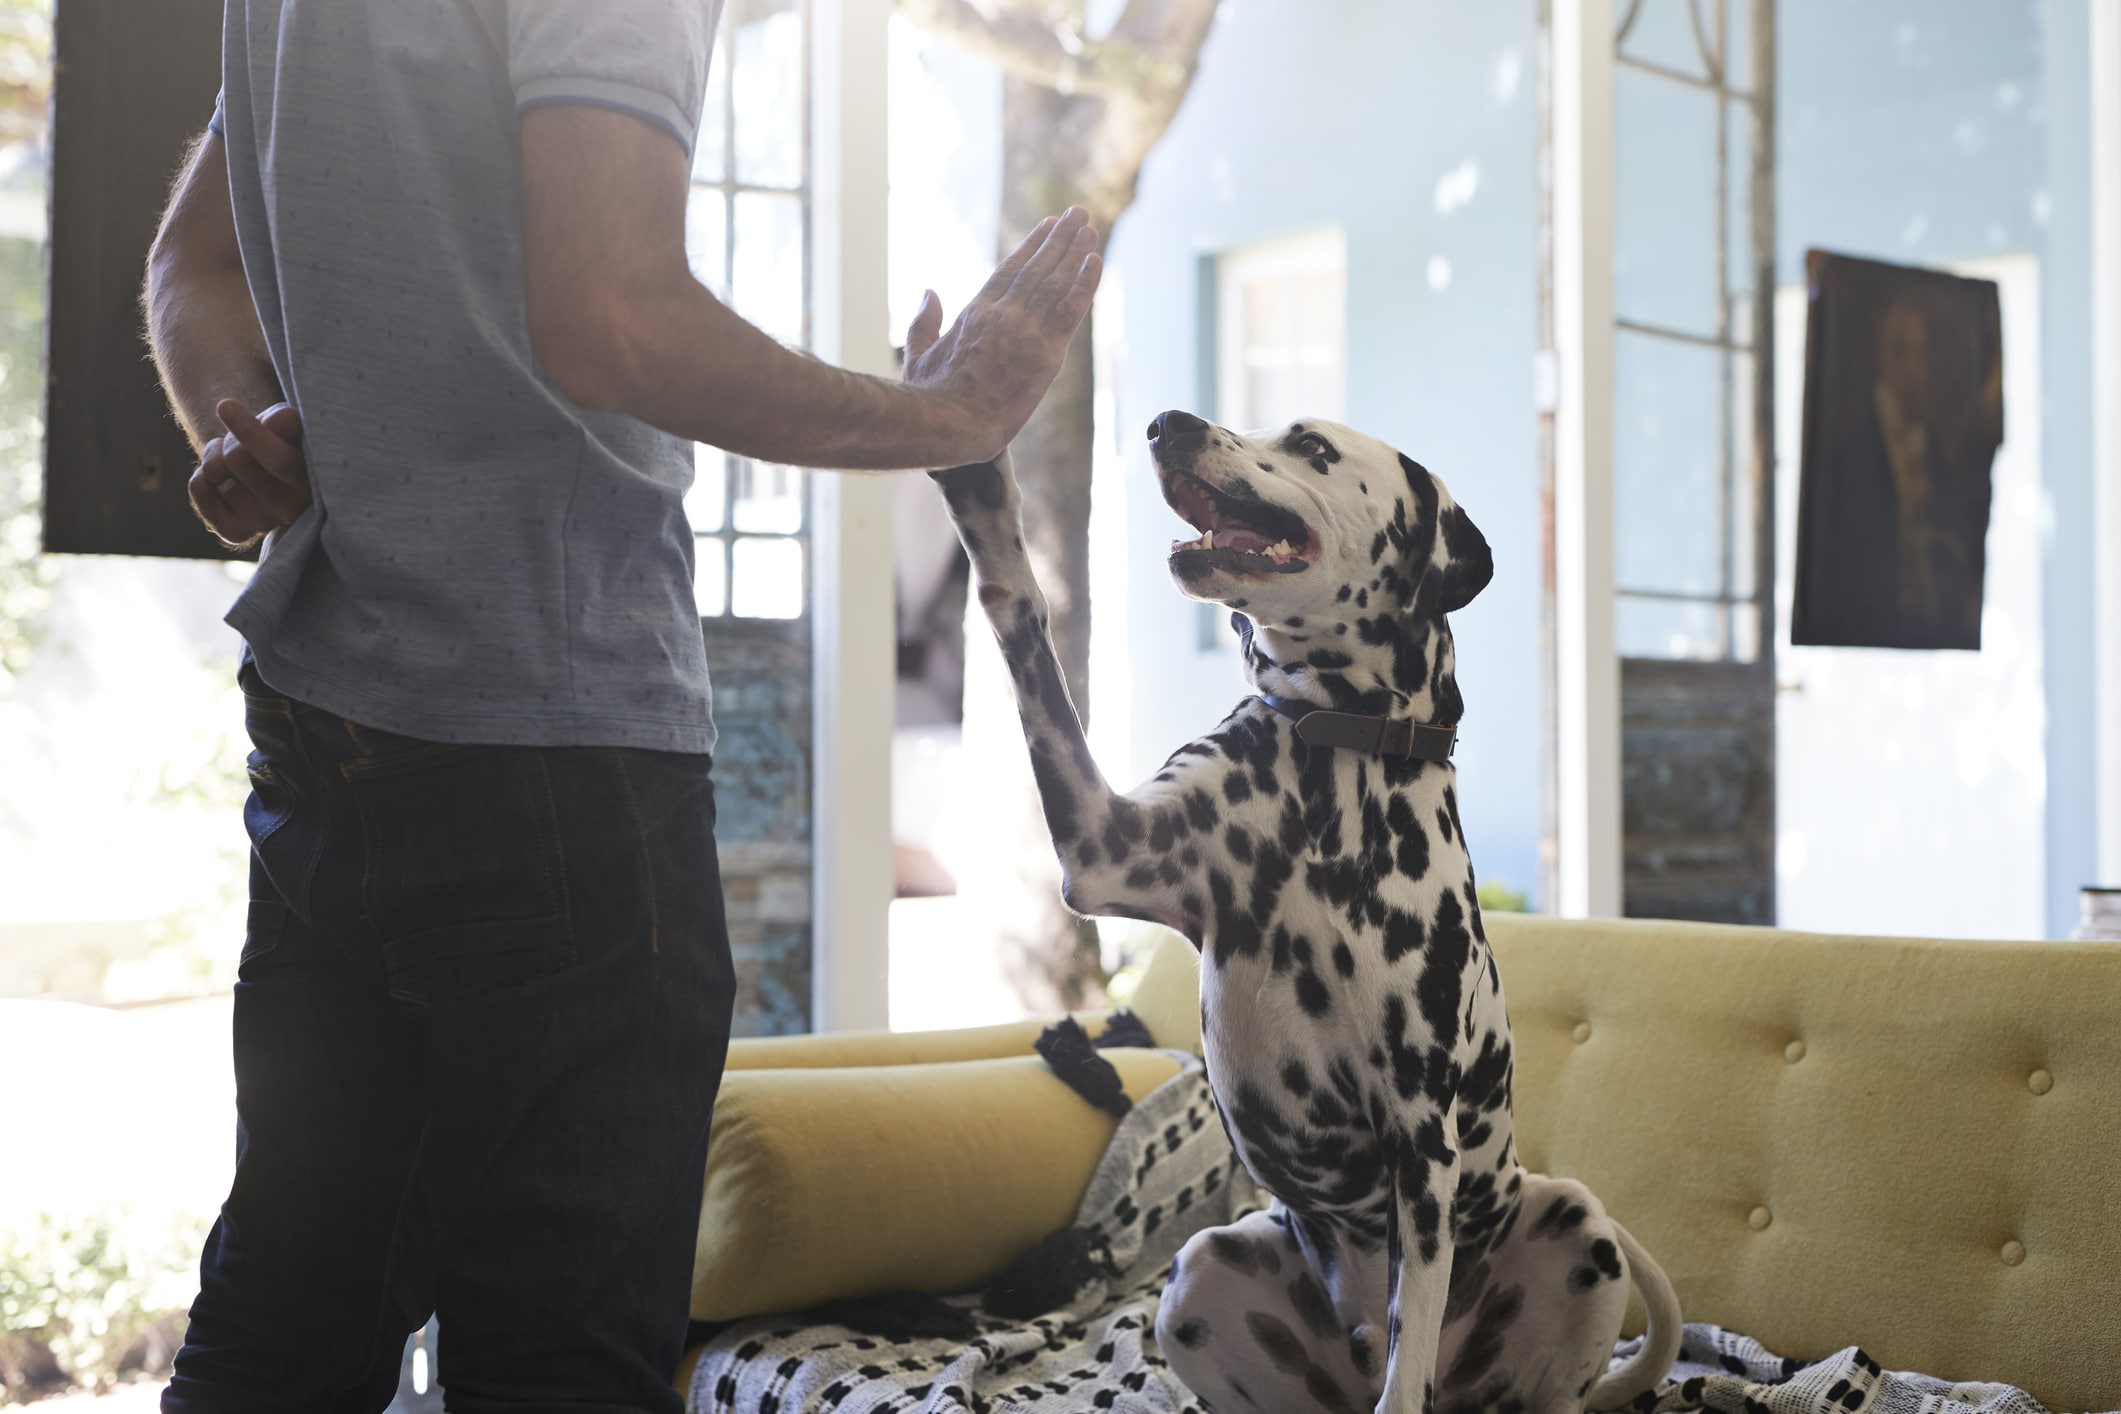 Man doing high five with his Dalmatian dog